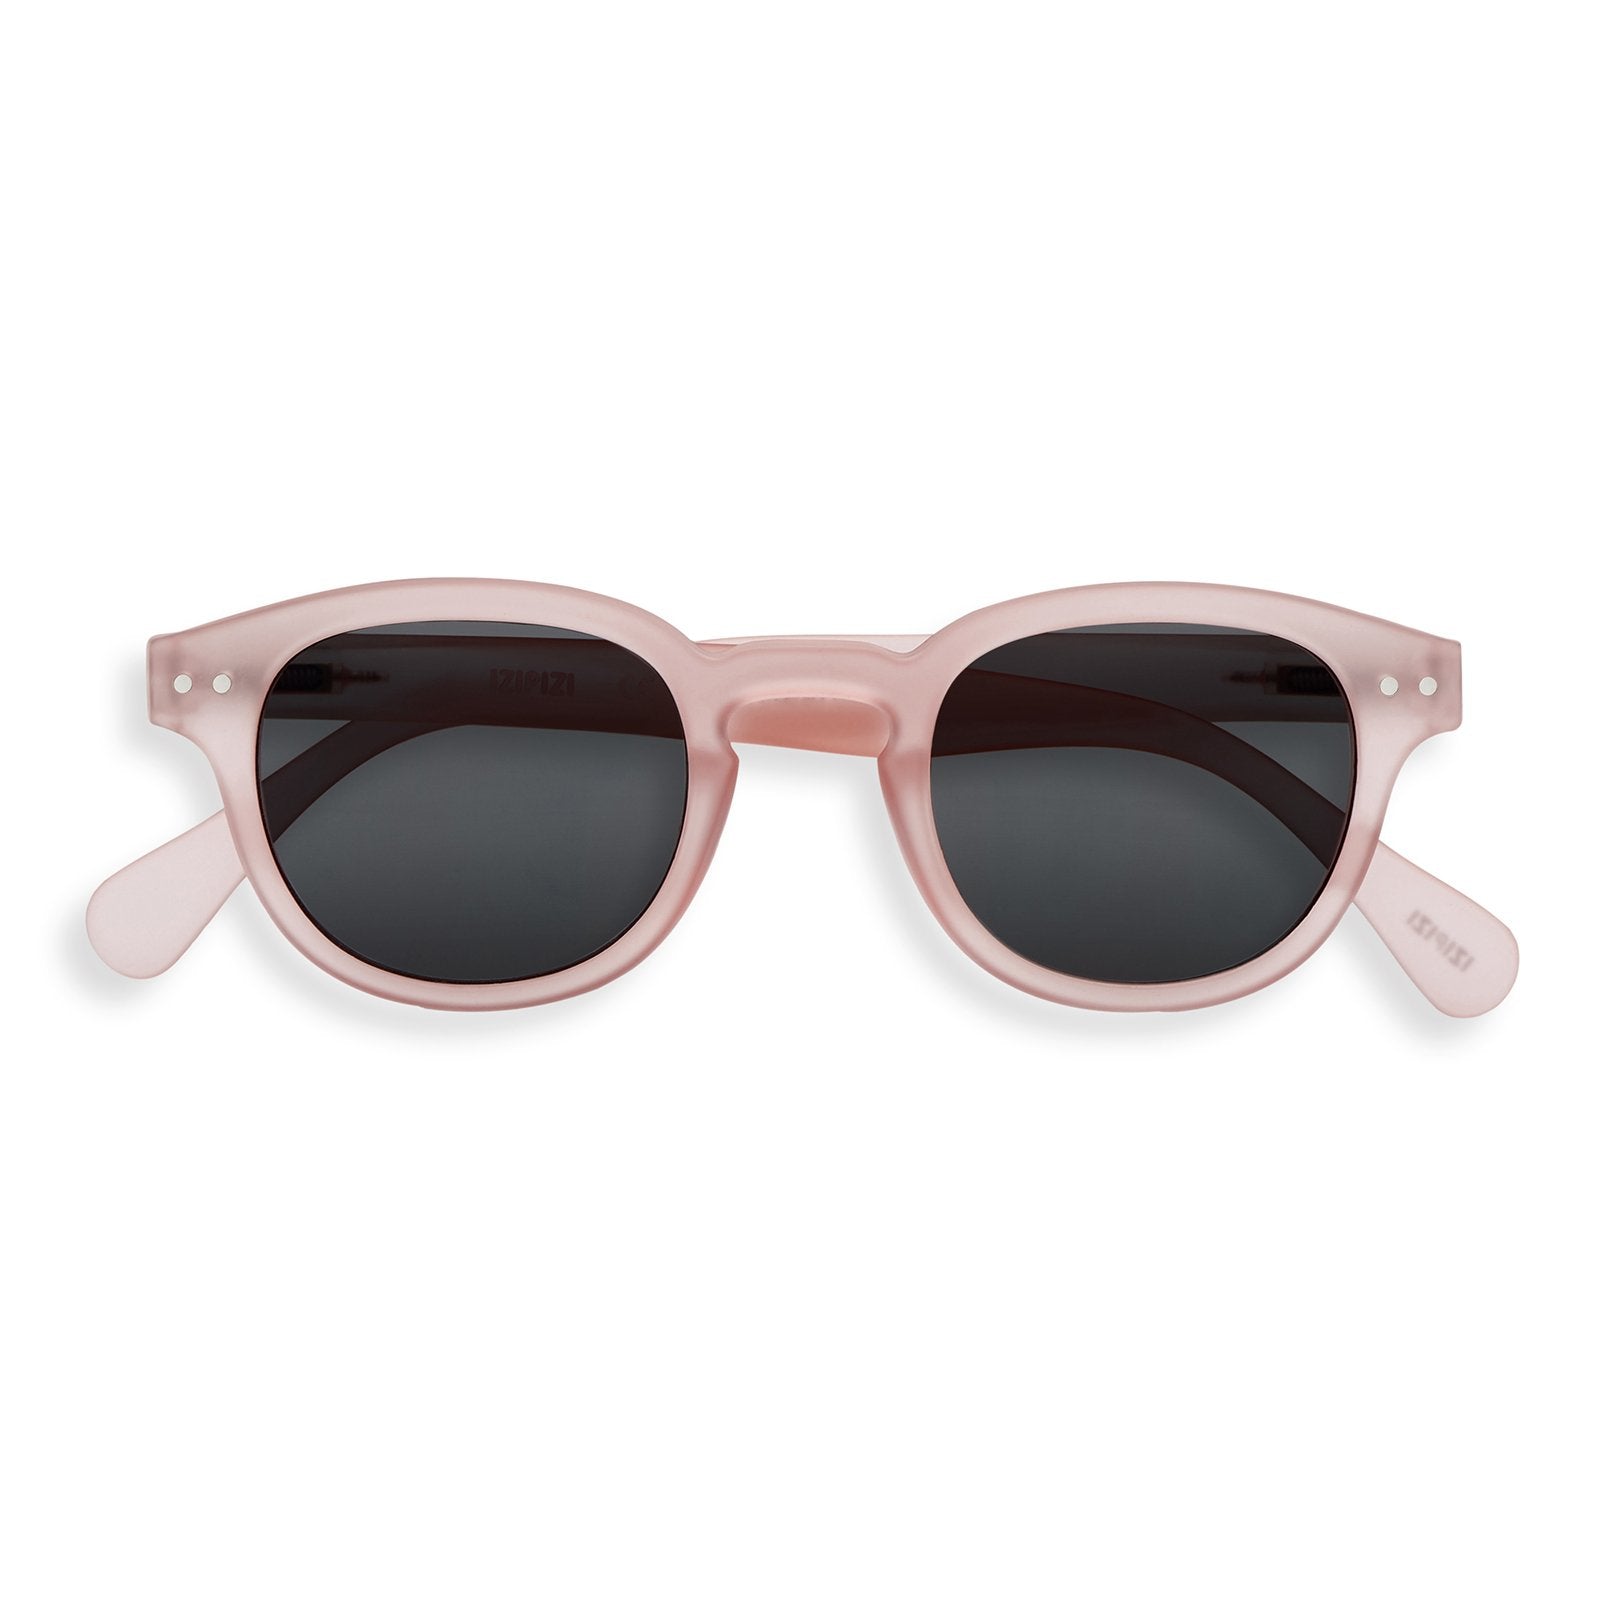 IZIPIZI, Sunglasses C Pink, Sunglasses,